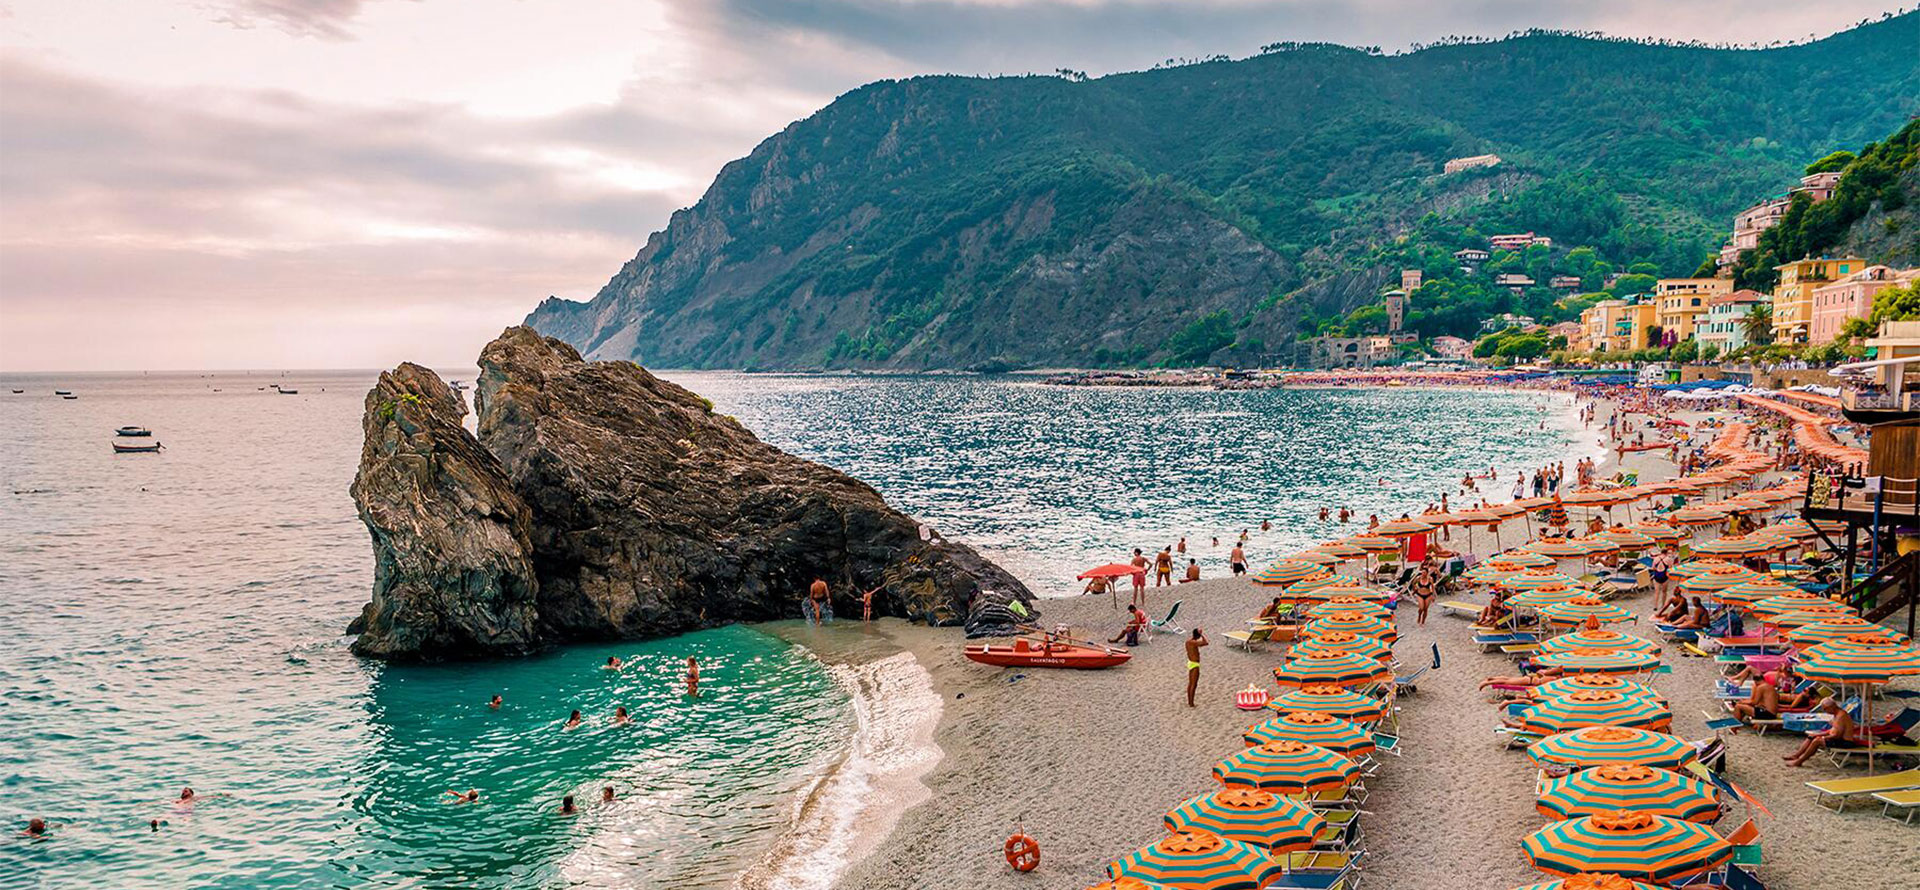 Beach on the Amalfi Coast in Italy.